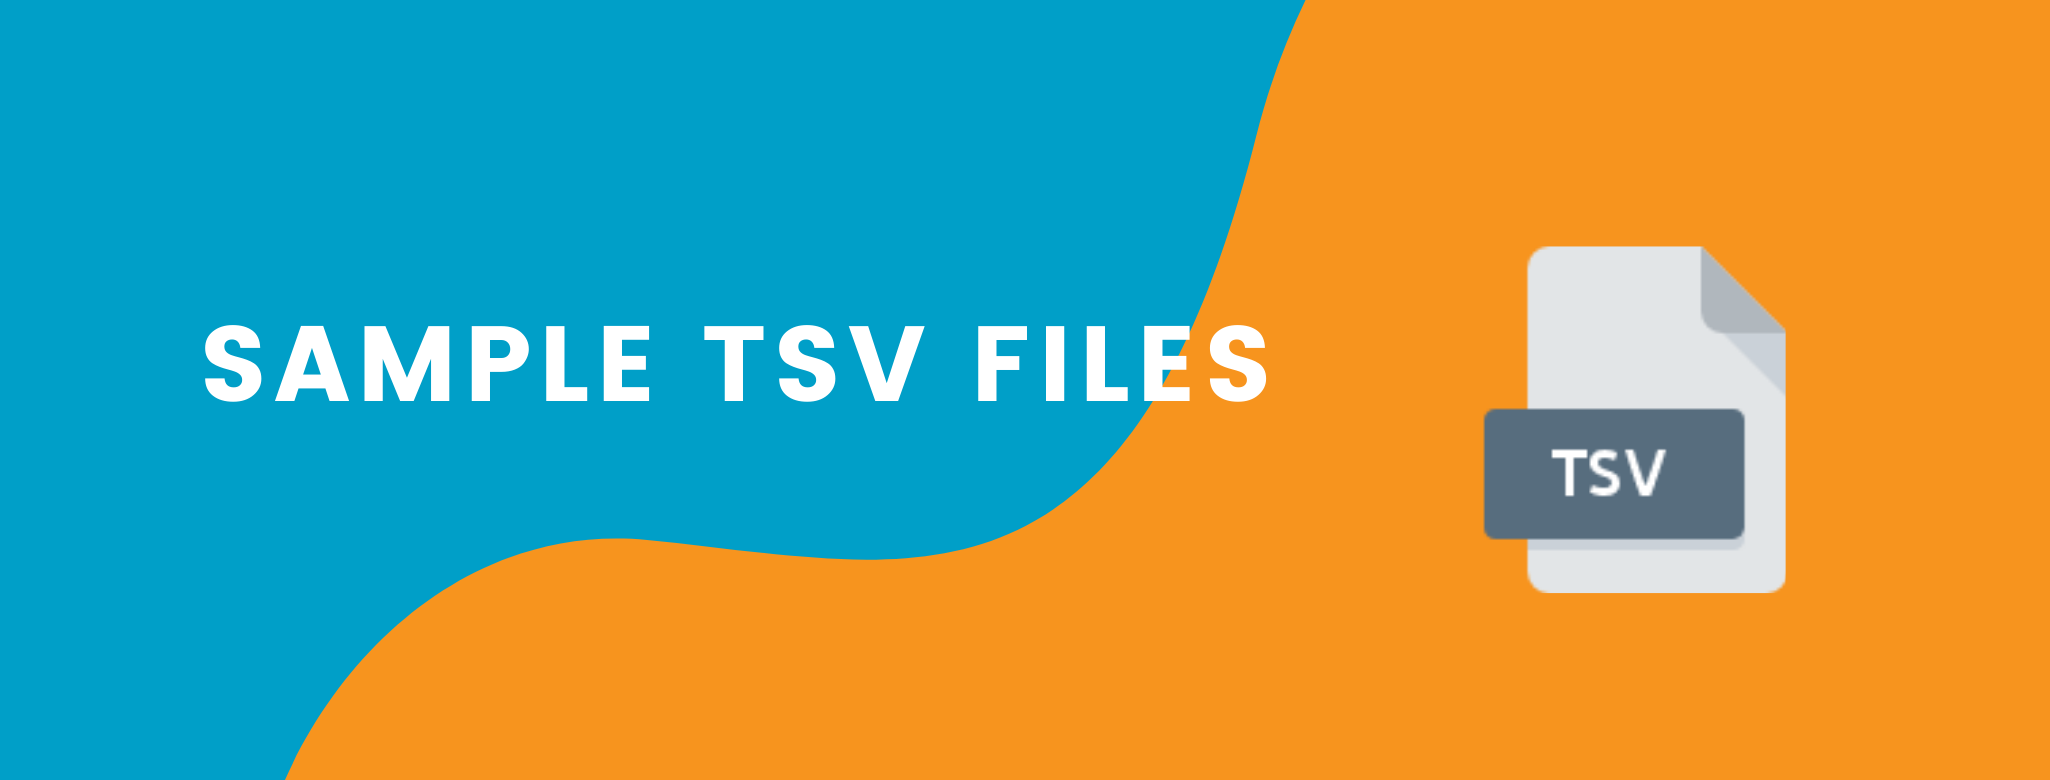 Sample TSV Files